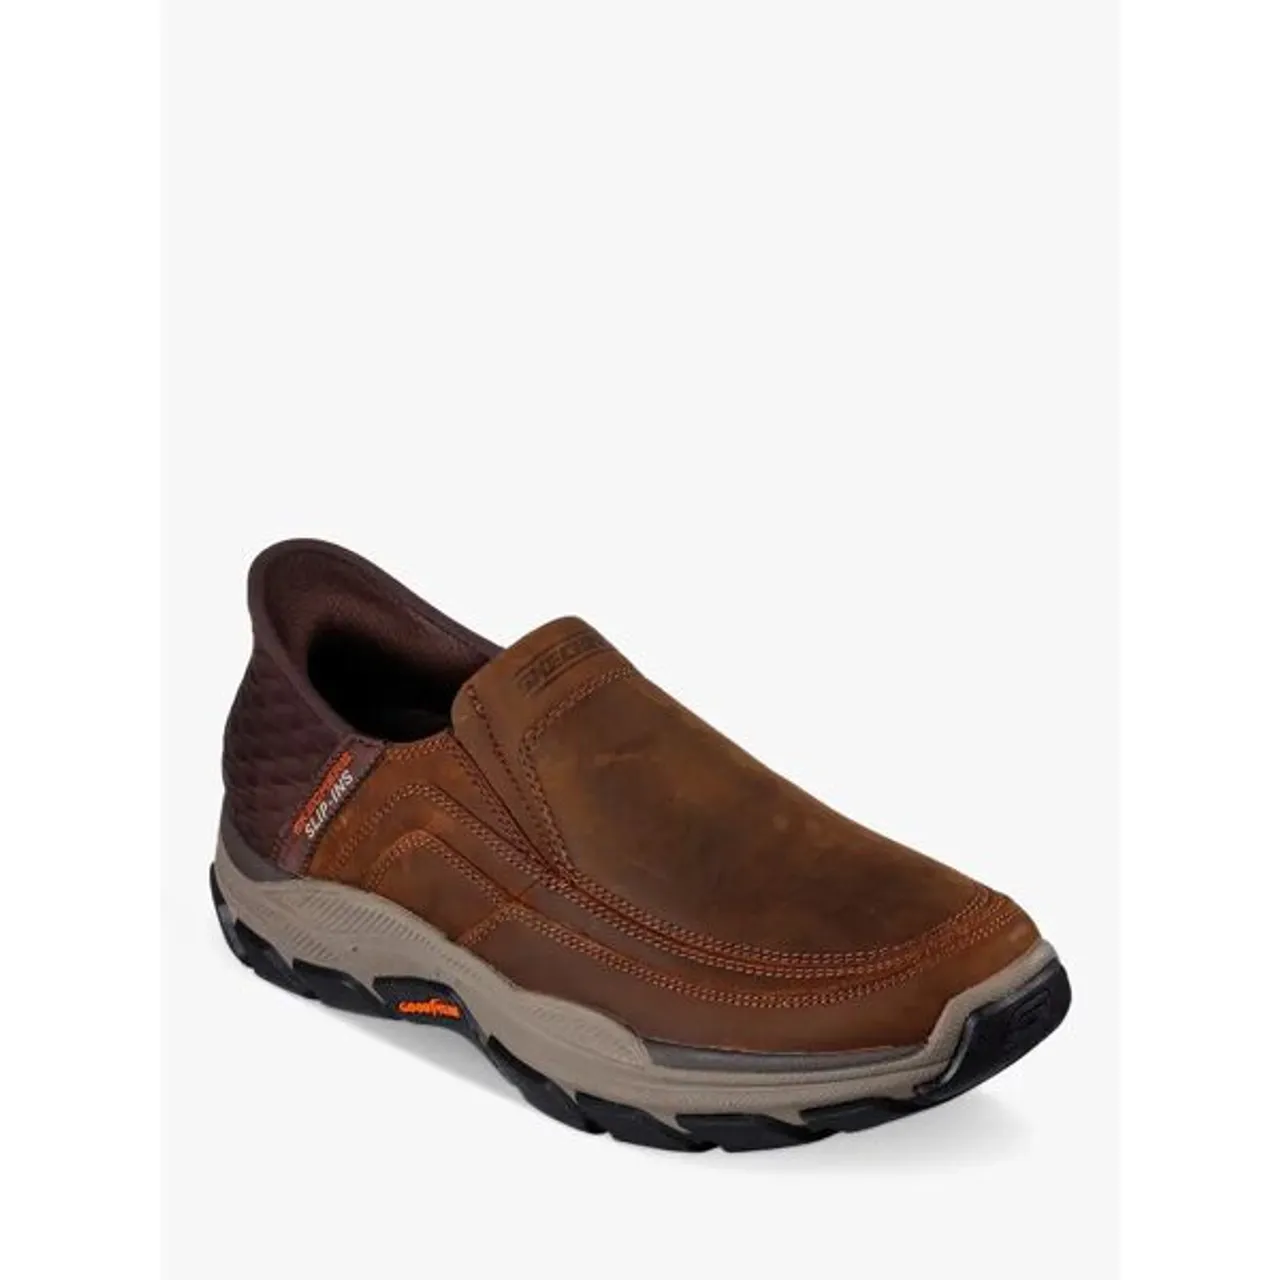 Skechers Respected Elgin Slip-On Shoes - Dark Brown - Male